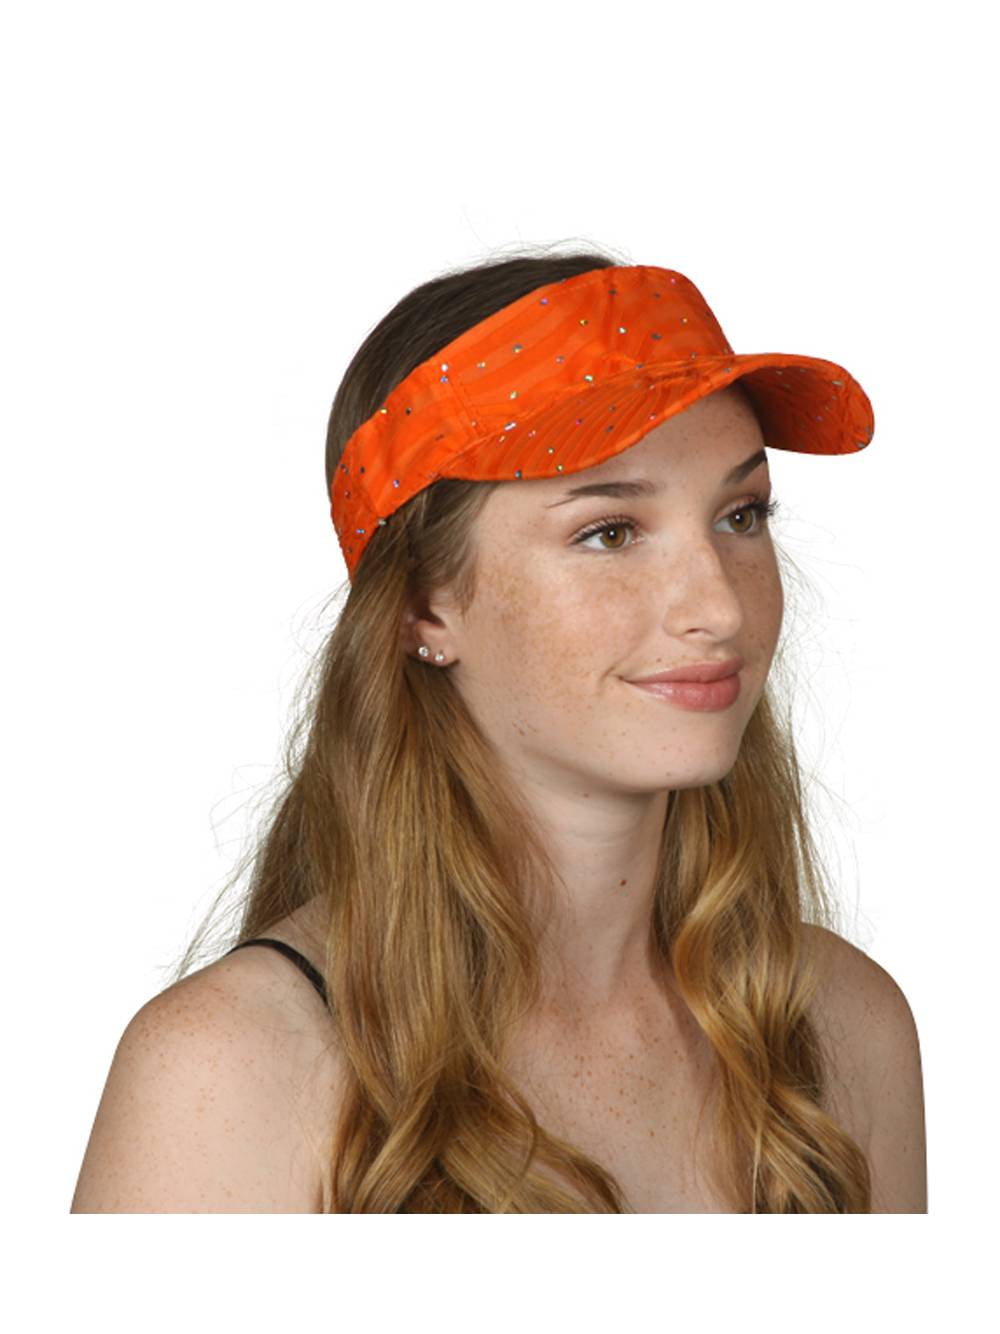 TopHeadwear Glitter Sequin Visor Hat - Orange - Walmart.com - Walmart.com